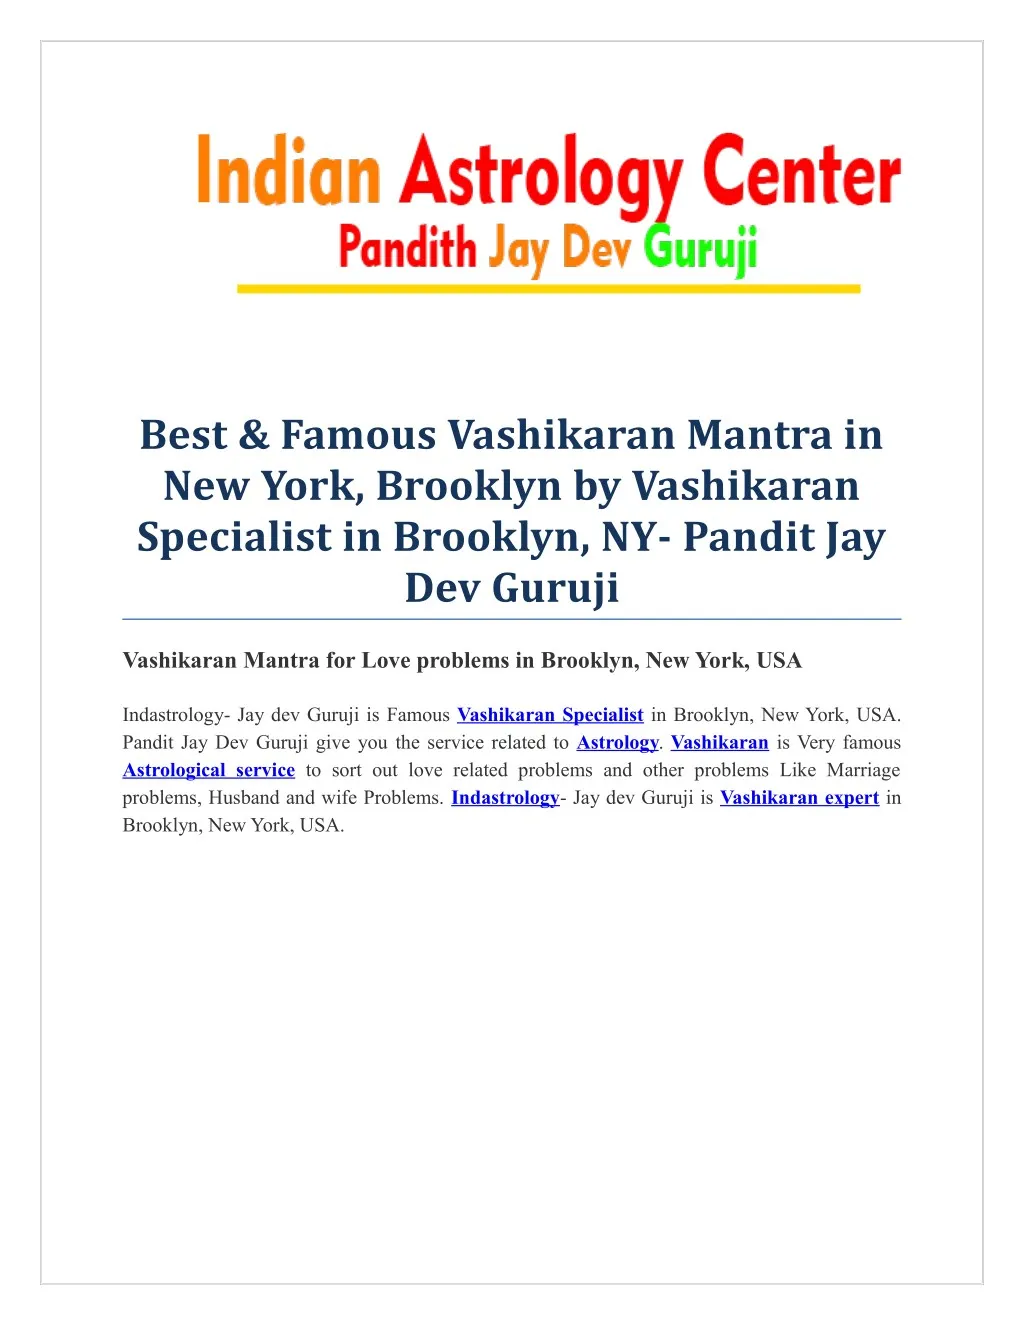 best famous vashikaran mantra in new york